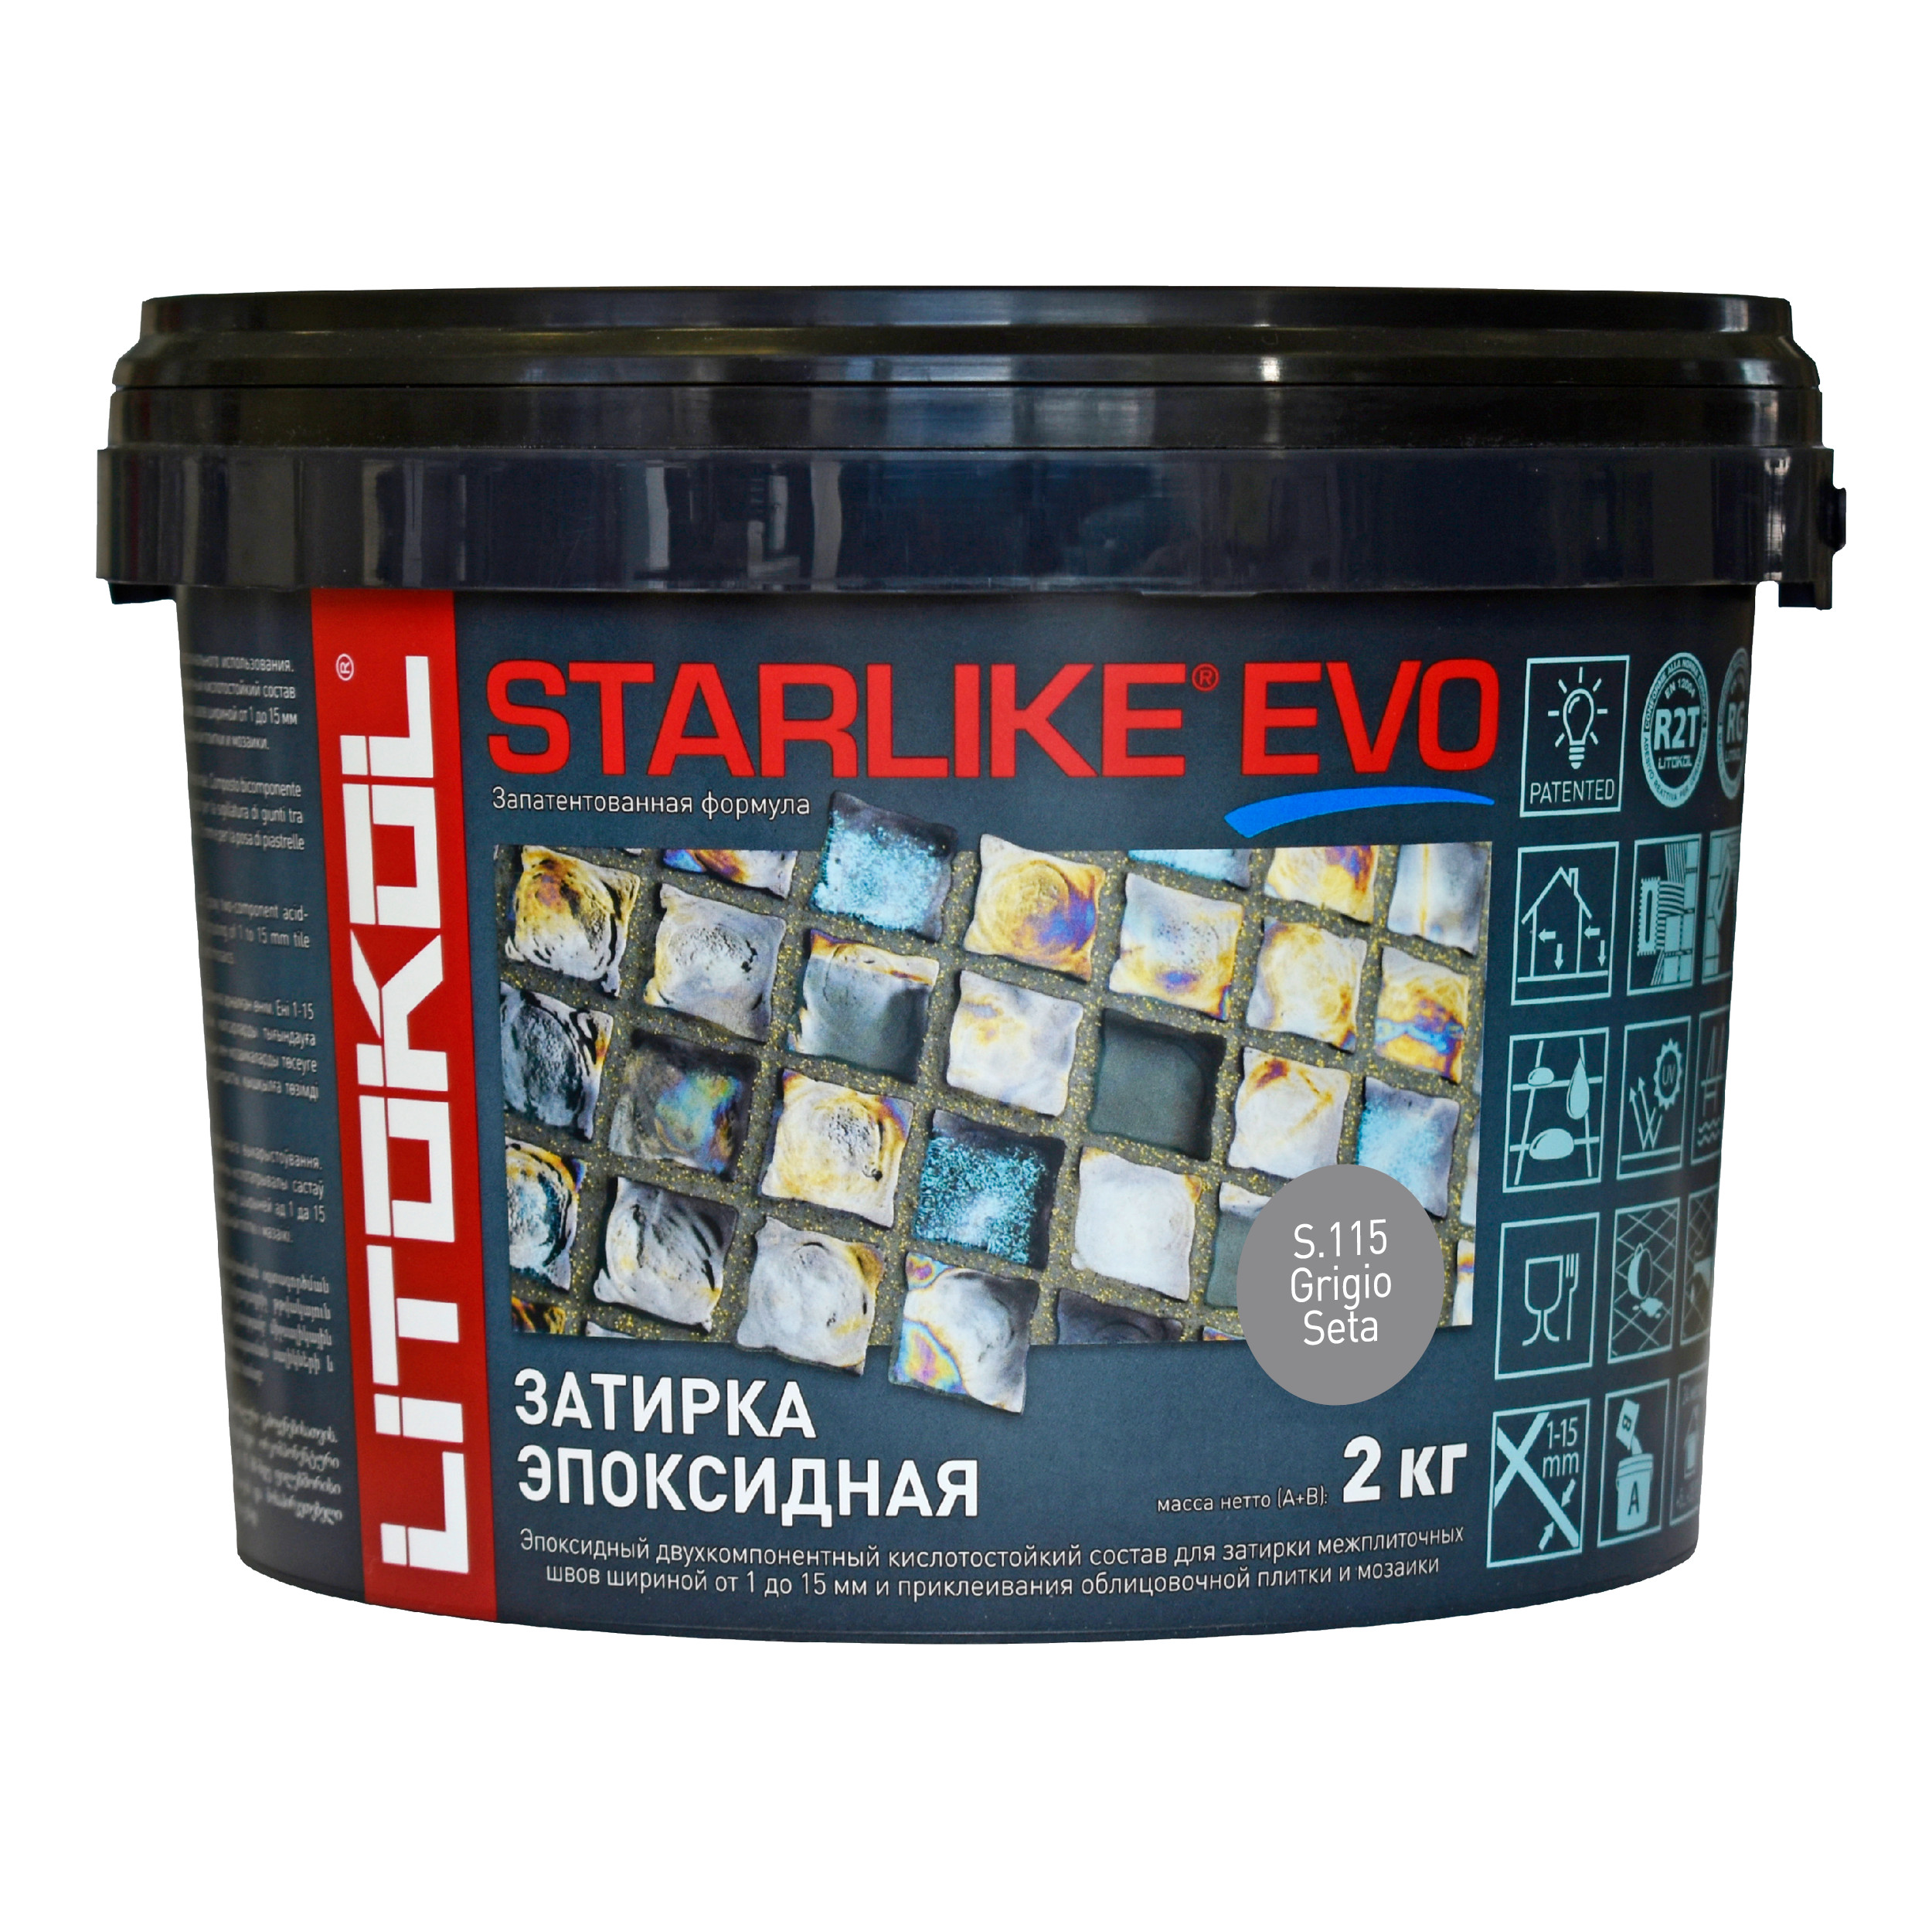  эпоксидная Litokol Starlike Evo S.115 цвет серый шёлк 2 кг .